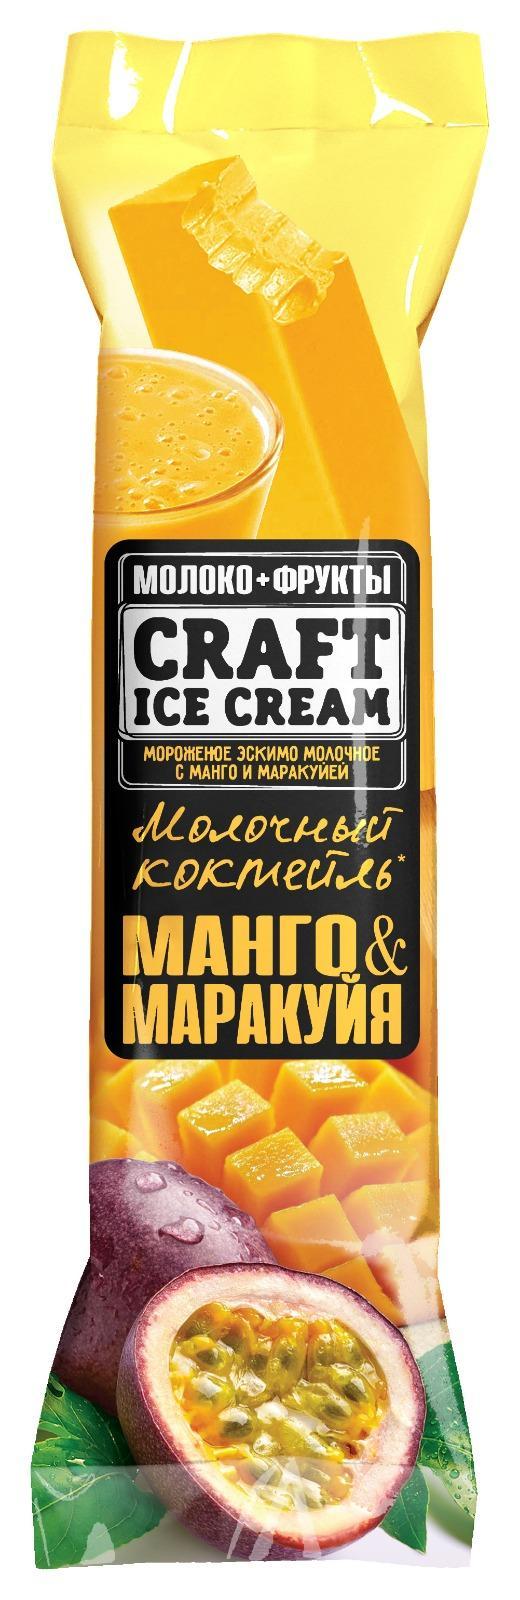 Мороженое эскимо Craft Ice Cream Молочный коктейль манго-маракуйя 60 гр., флоу-пак